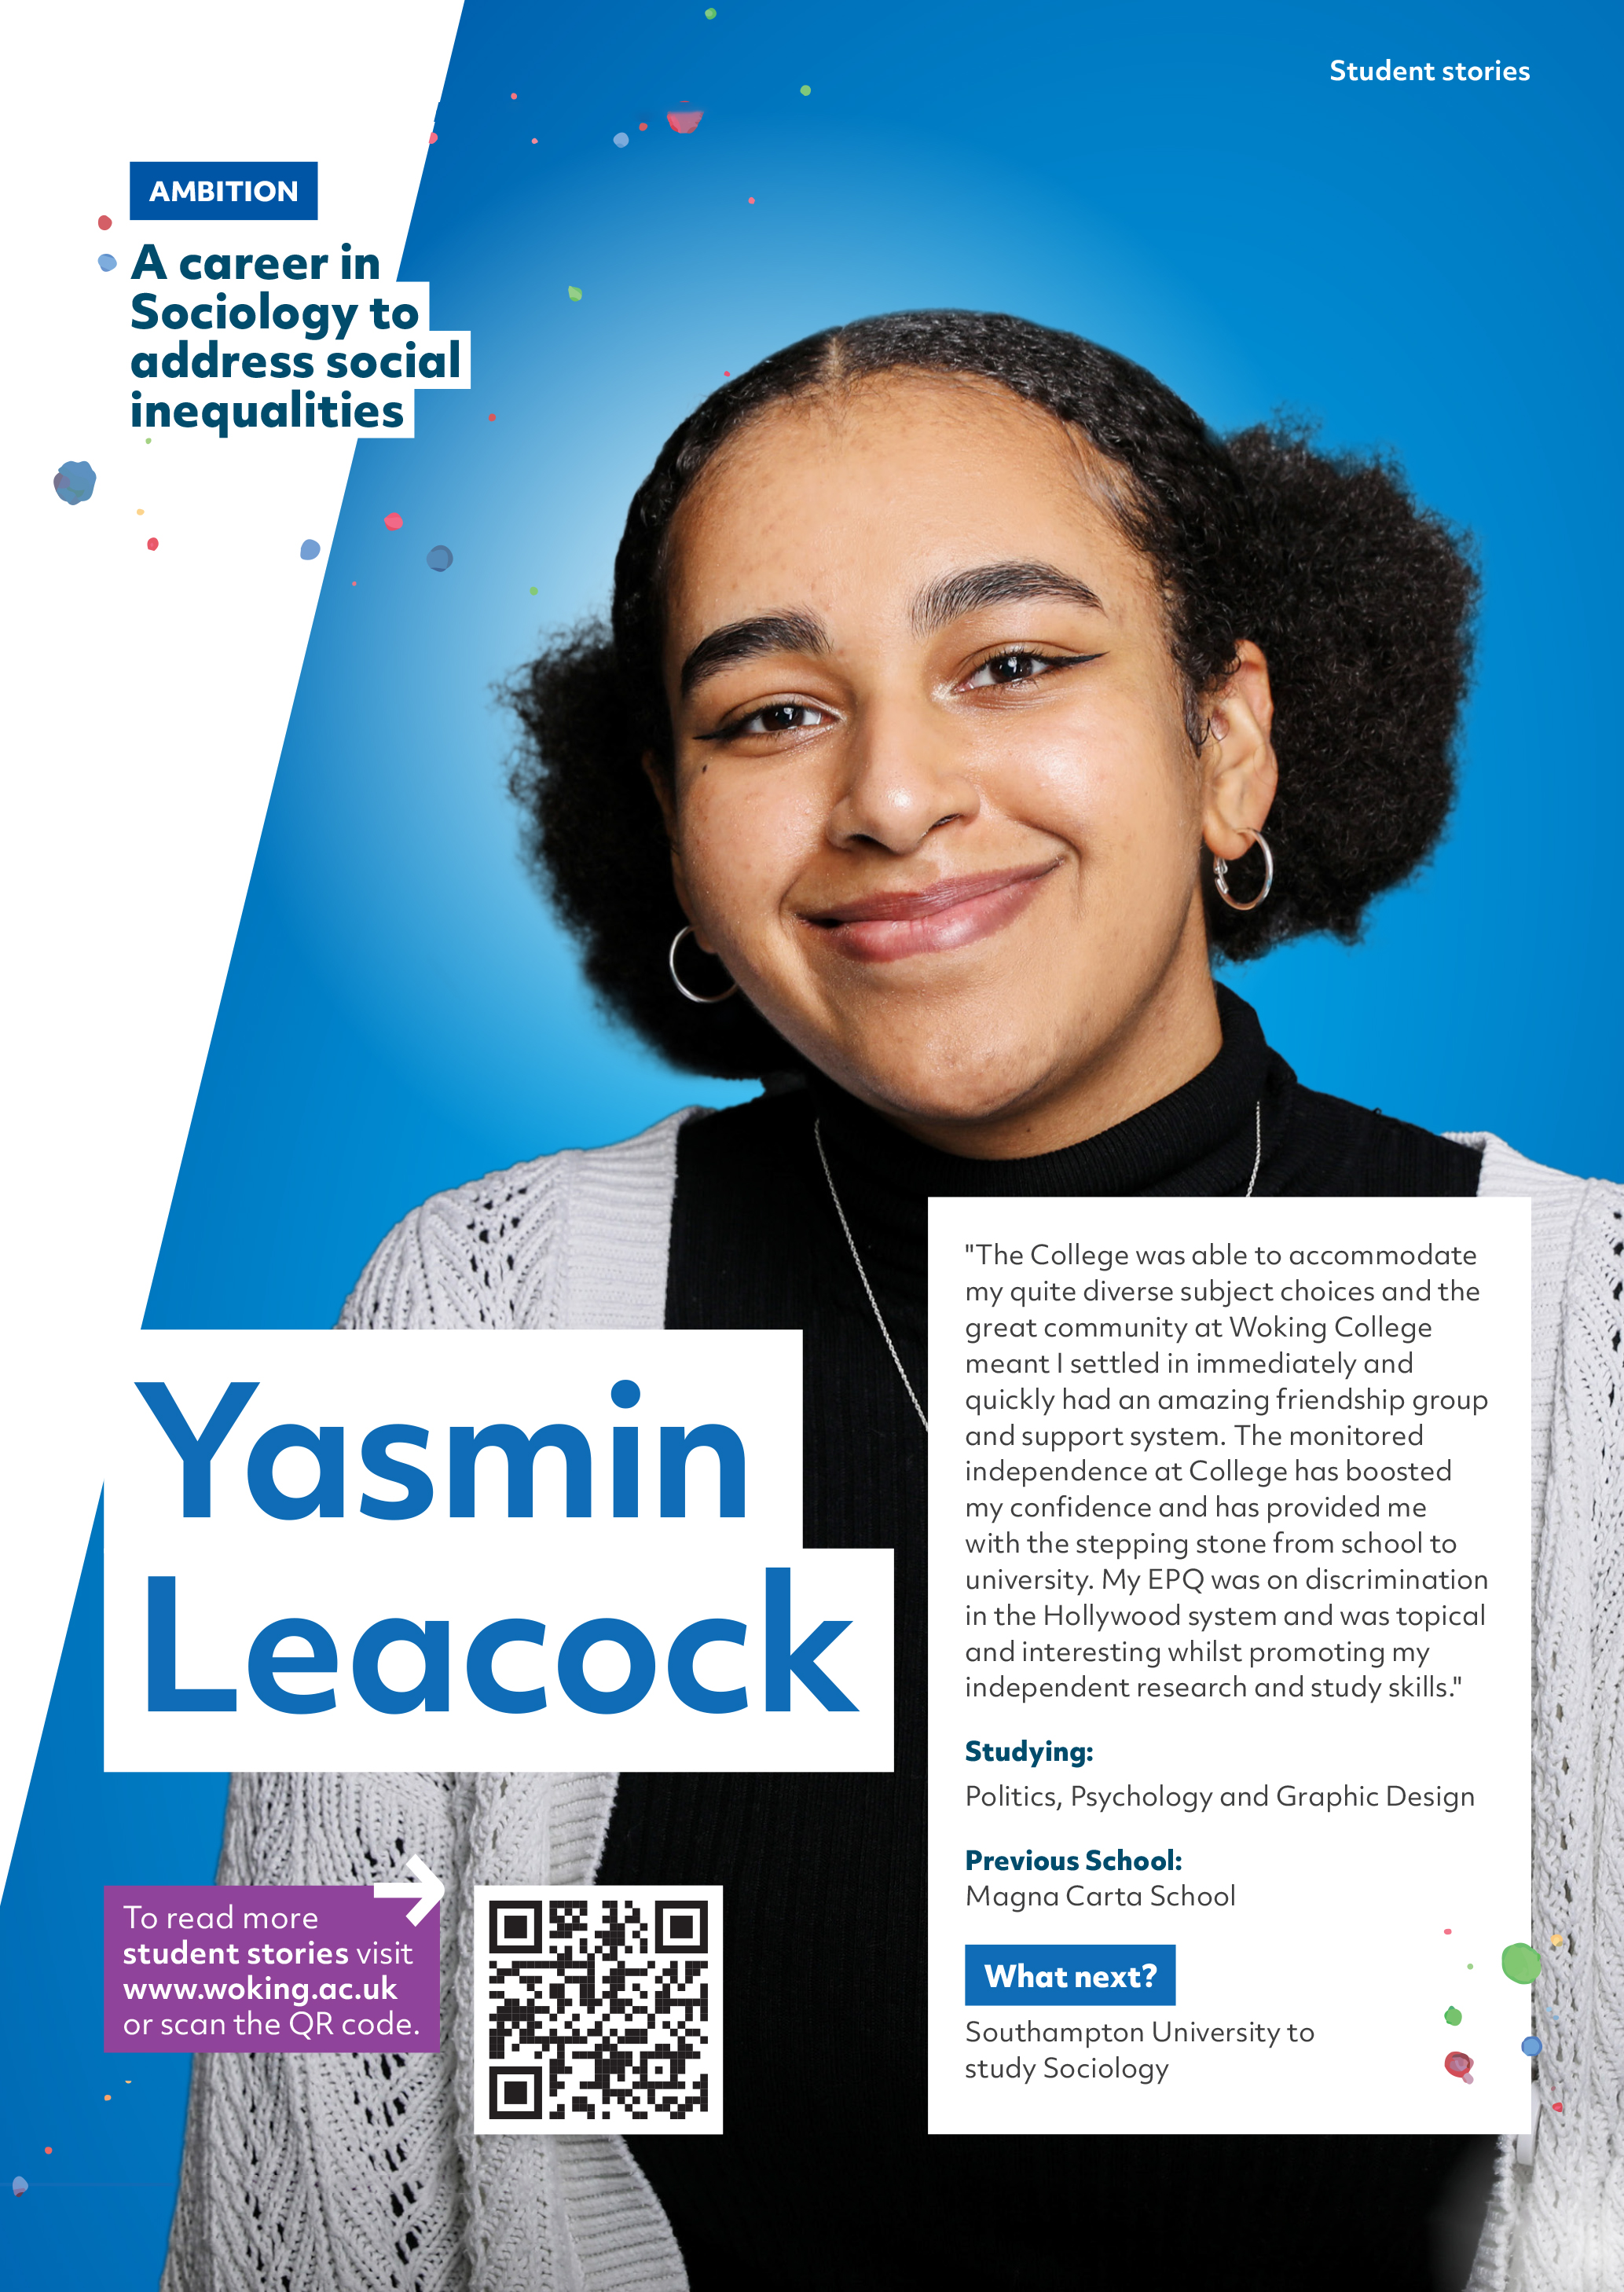 Yasmin Leacock